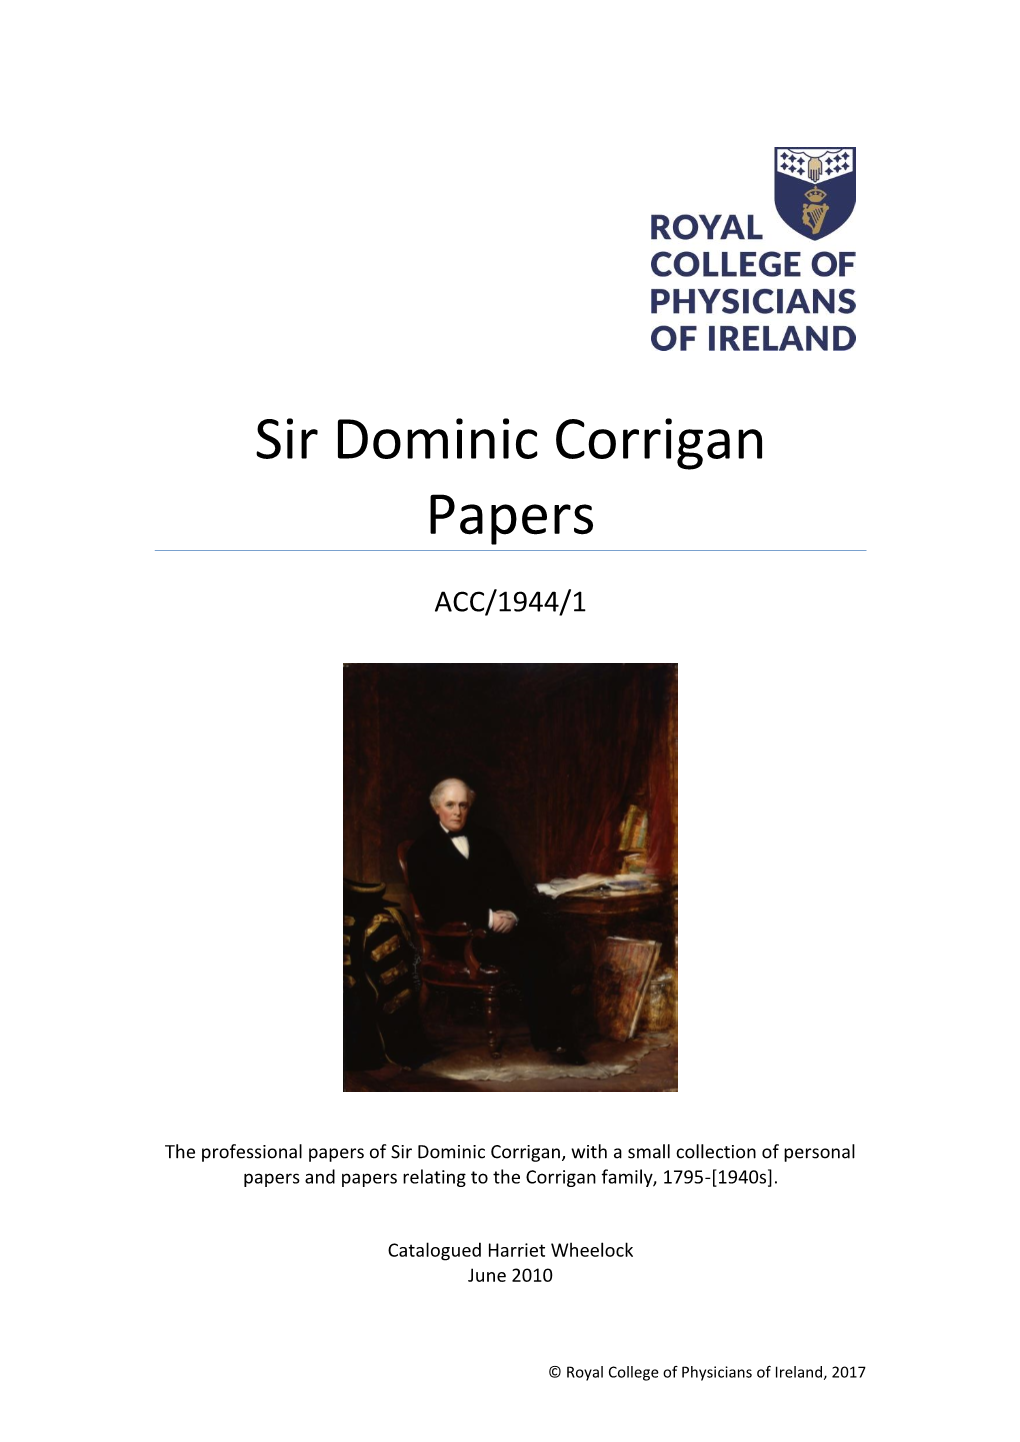 Sir Dominic Corrigan Papers